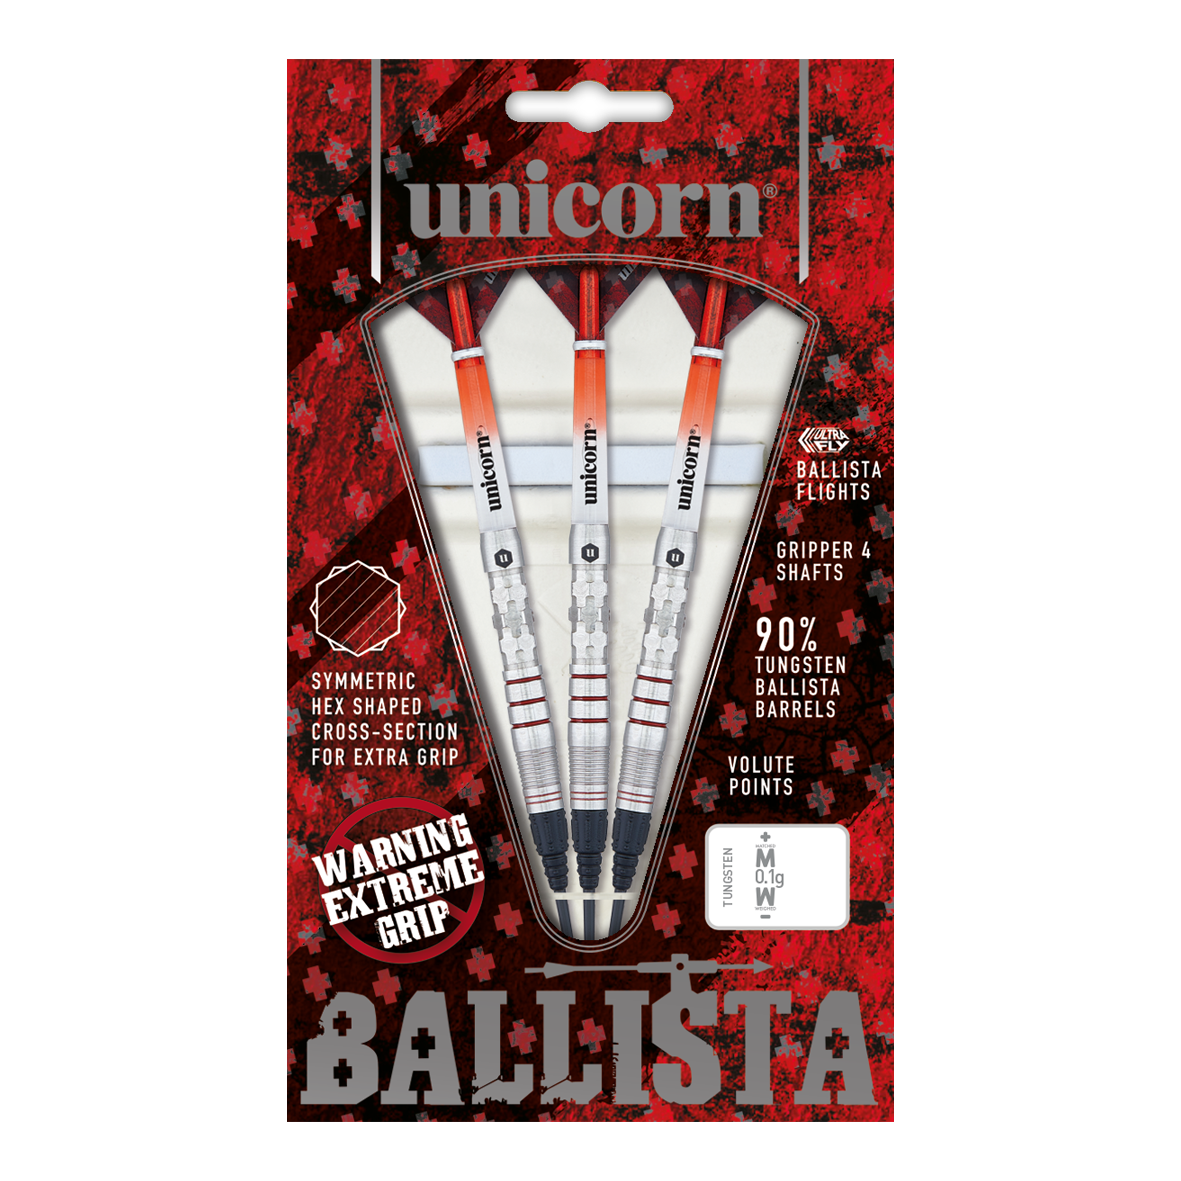 Unicorn Ballista Style 3 fléchettes souples